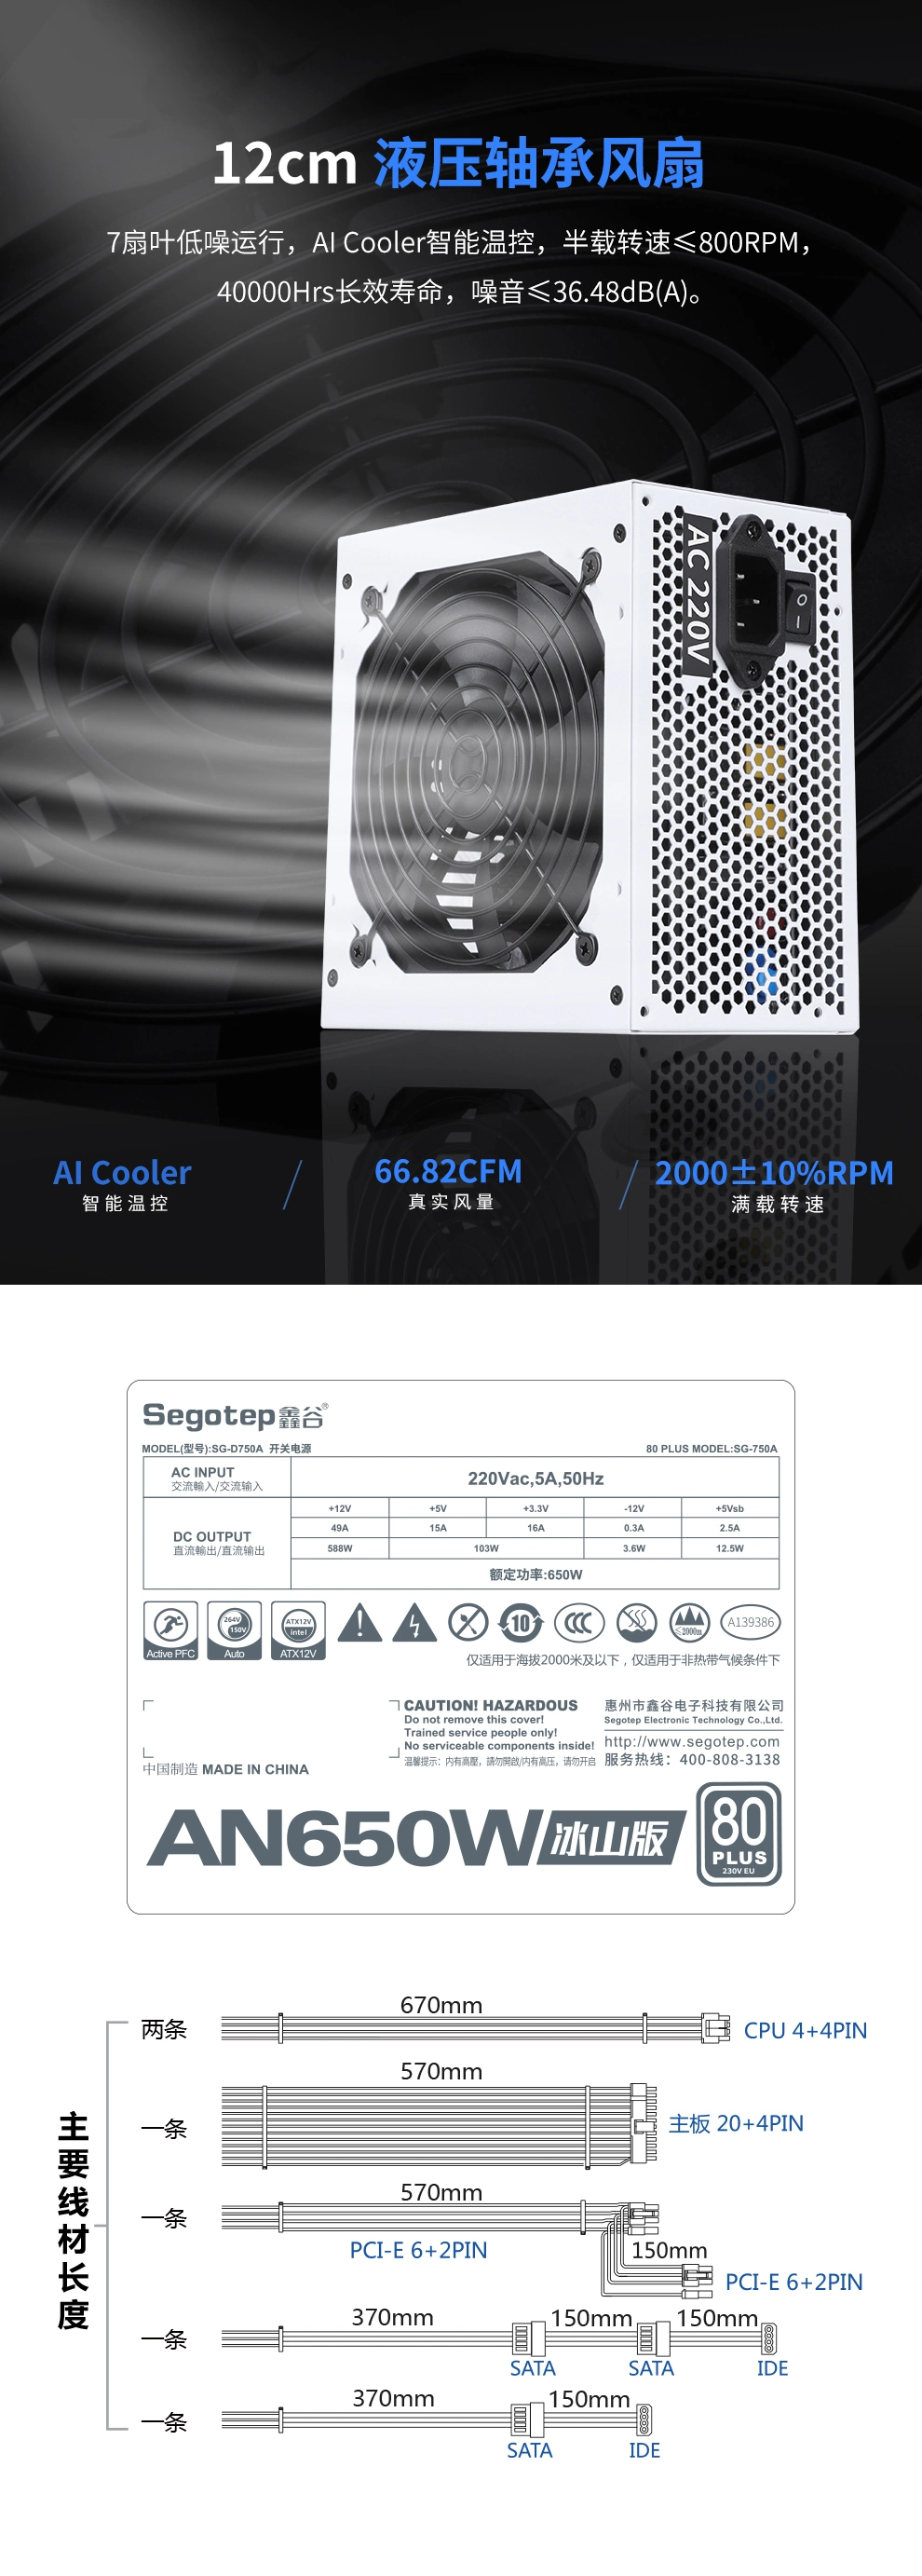 Segotep Computer Power Supply, An650W, Non Modular Gaming Desktop Power Supply, 80plus Standard/White Certified